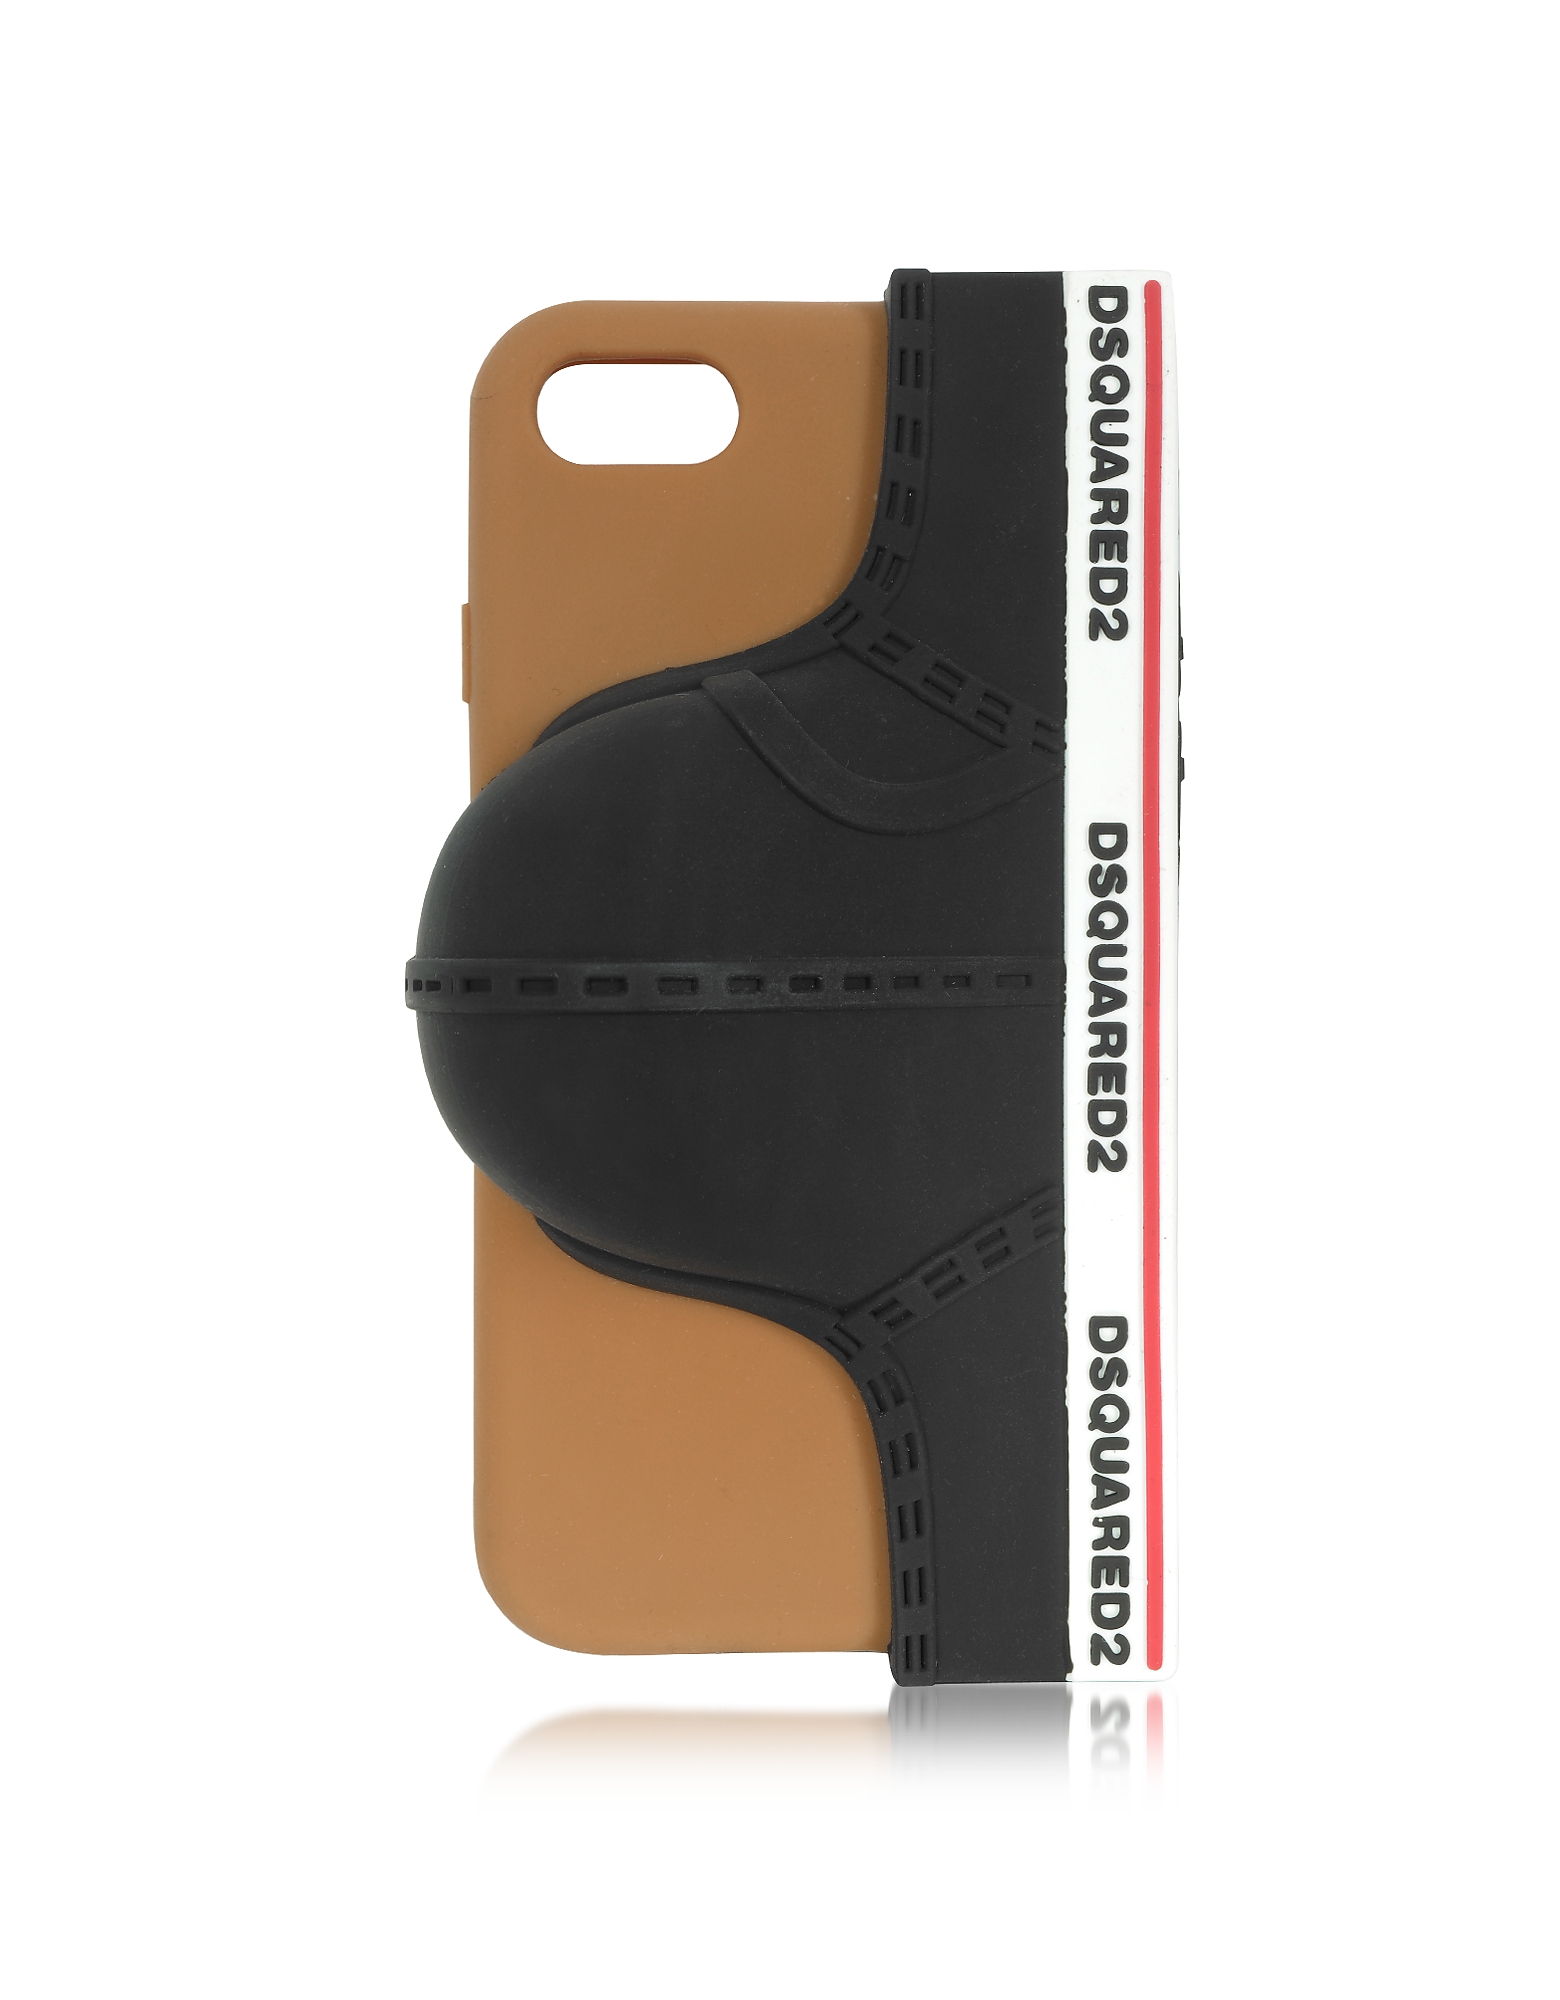 DSquared2 Designer Small Leather Goods, Black Silicone Signature iPhone 7 Cover w/Briefs